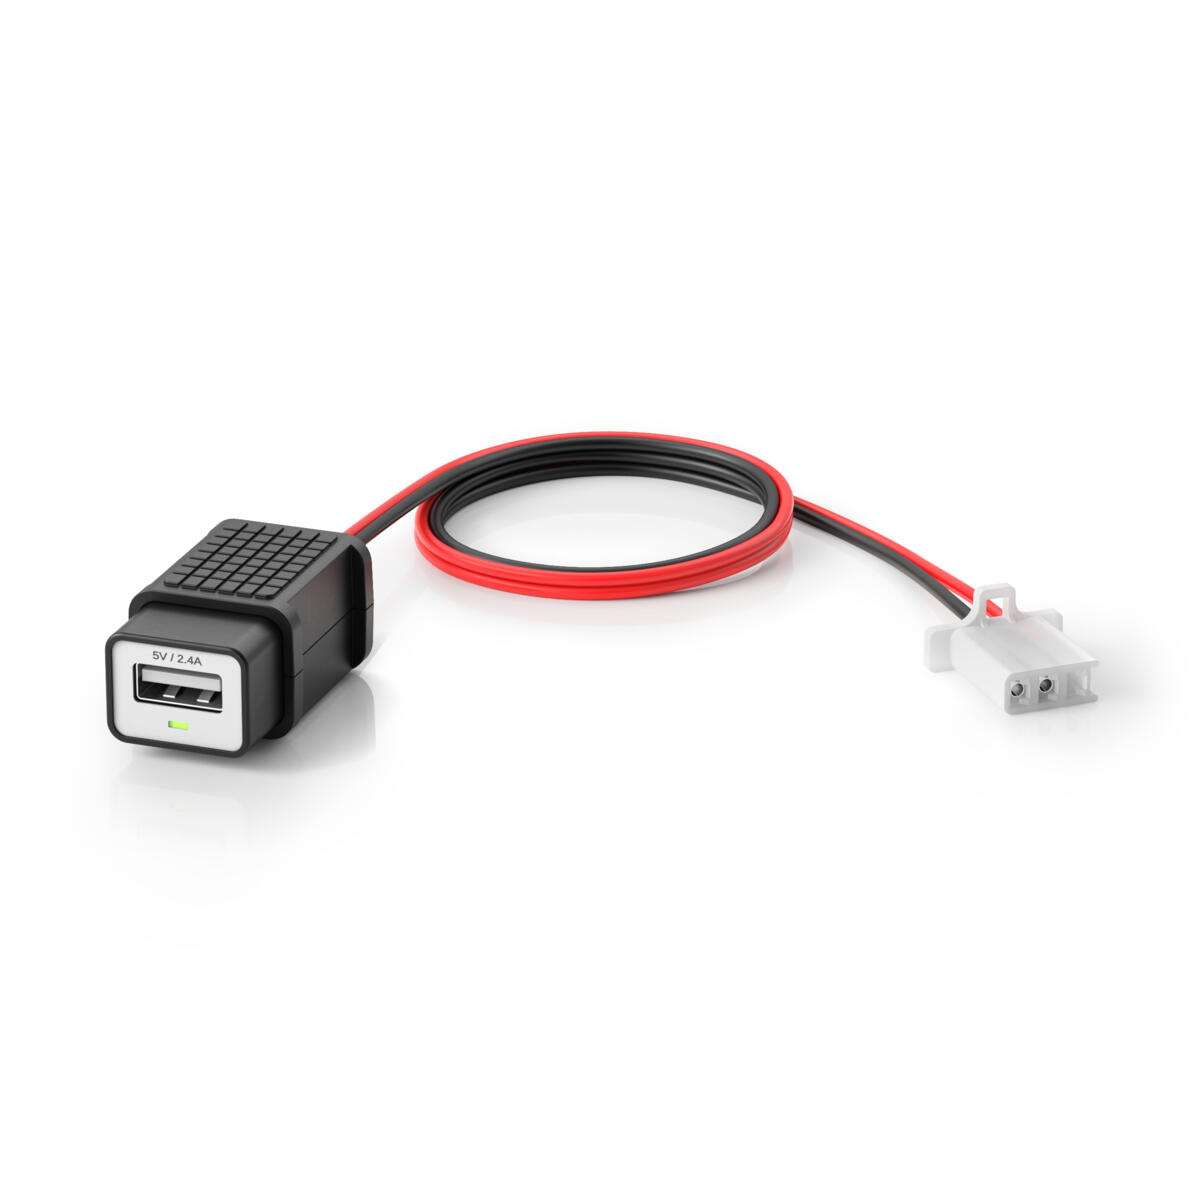 USB 5 Volt Auslass-Set für vorverkabelte Geräte